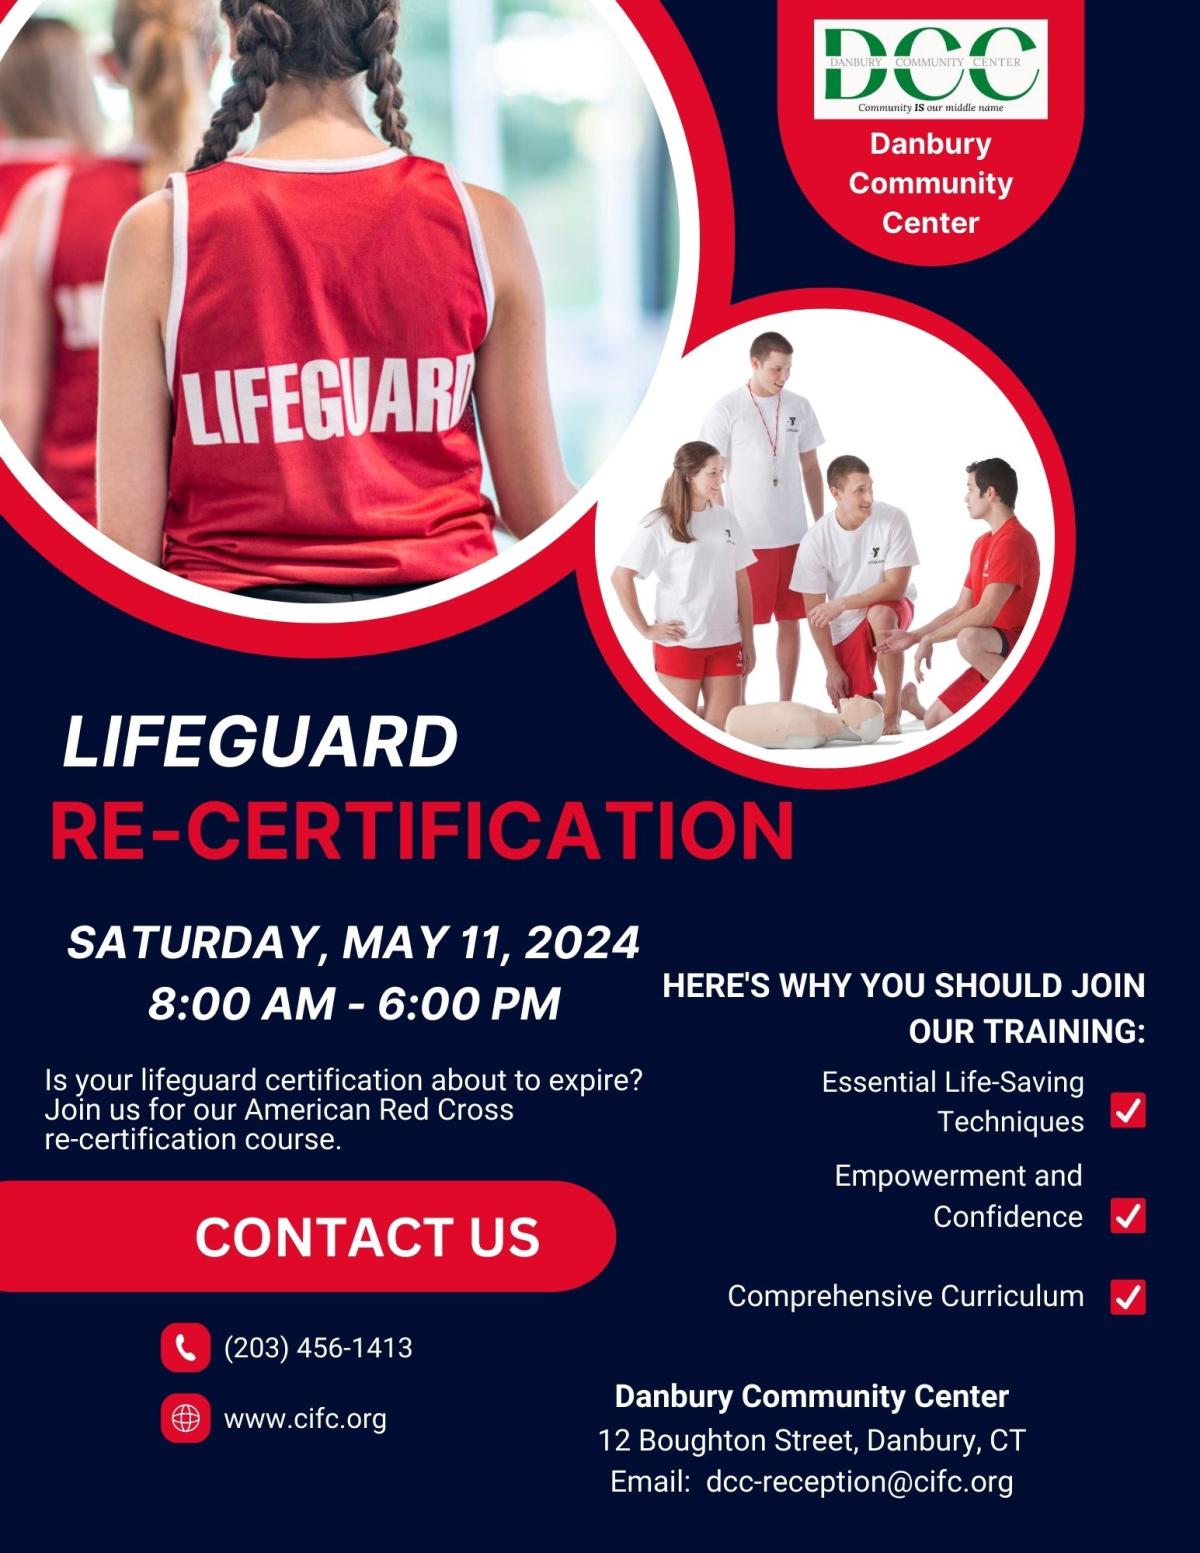 Lifeguard recertification course